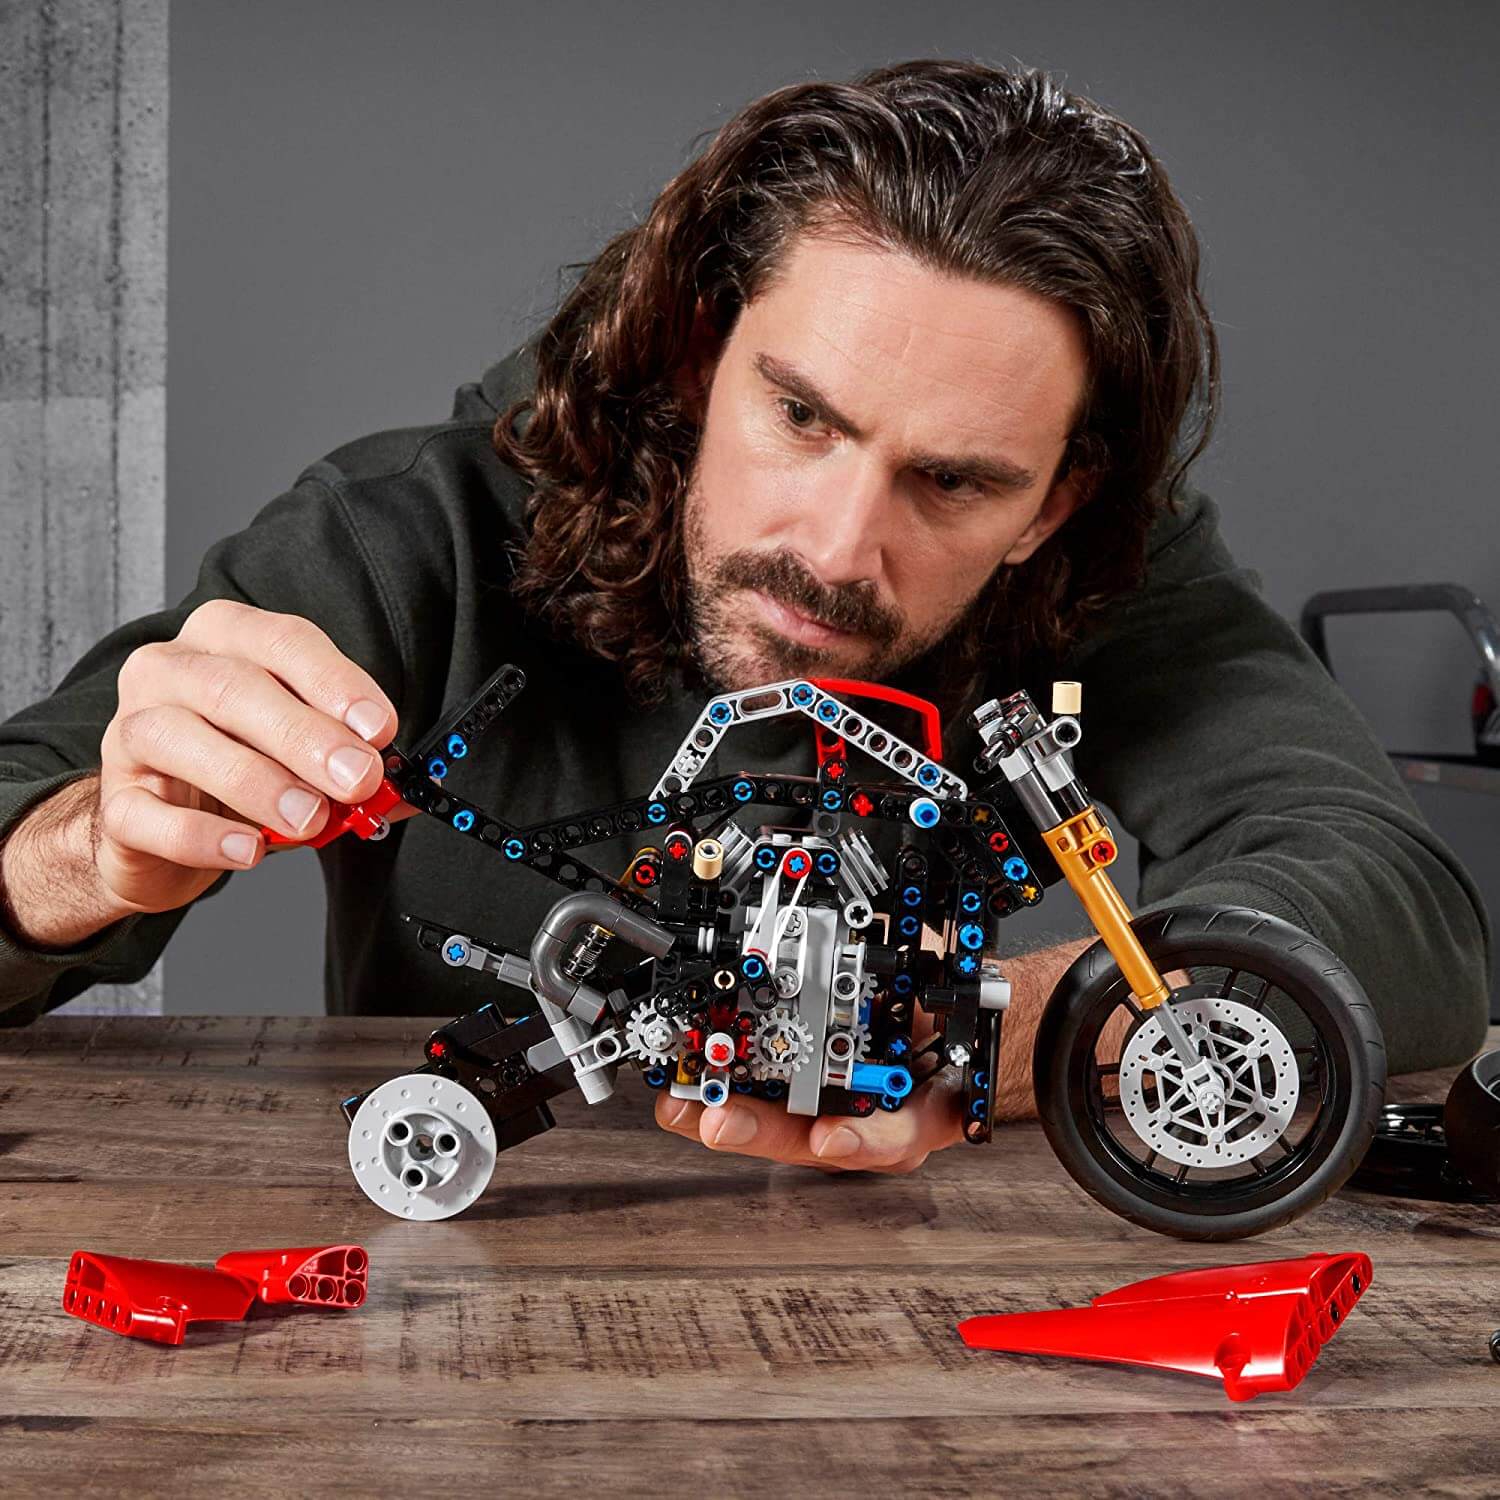 LEGO Technic Ducati Panigale V4 R 646 Piece Building Set (42107)